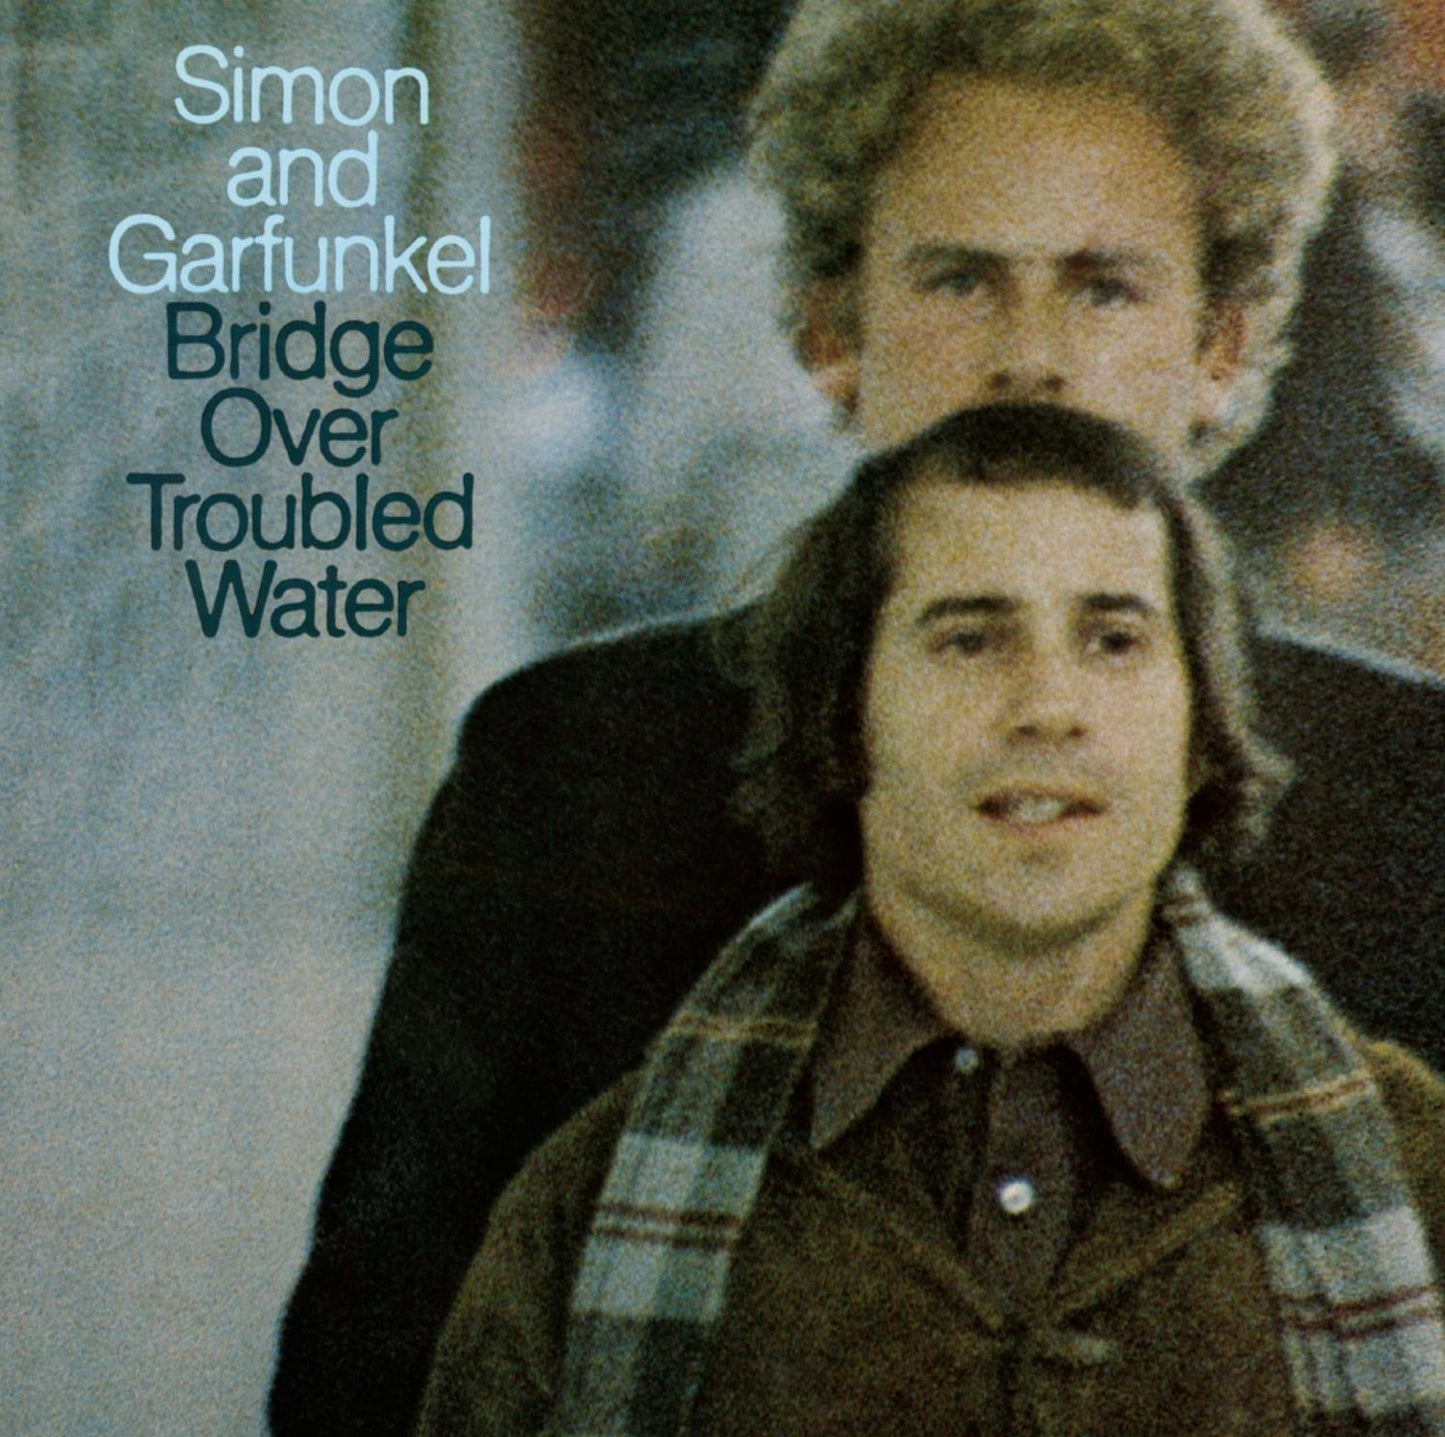 SIMON AND GARFUNKEL - BRIDGE OVER TROUBLED WATER - VINYL LP